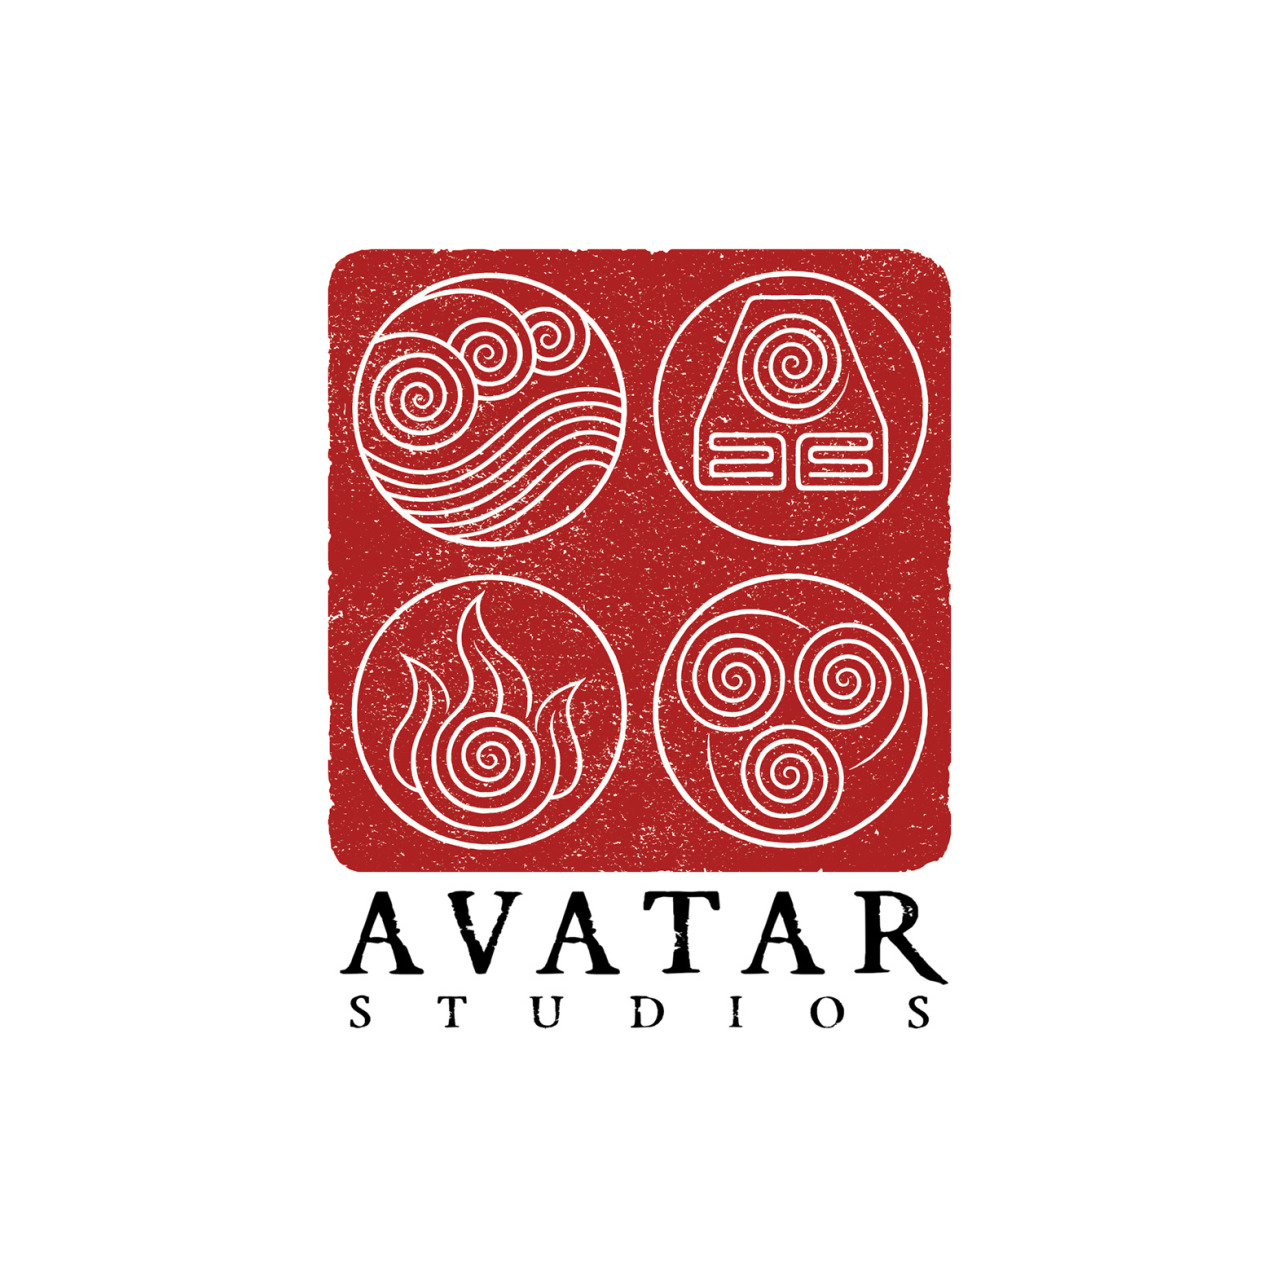 estúdios de avatar